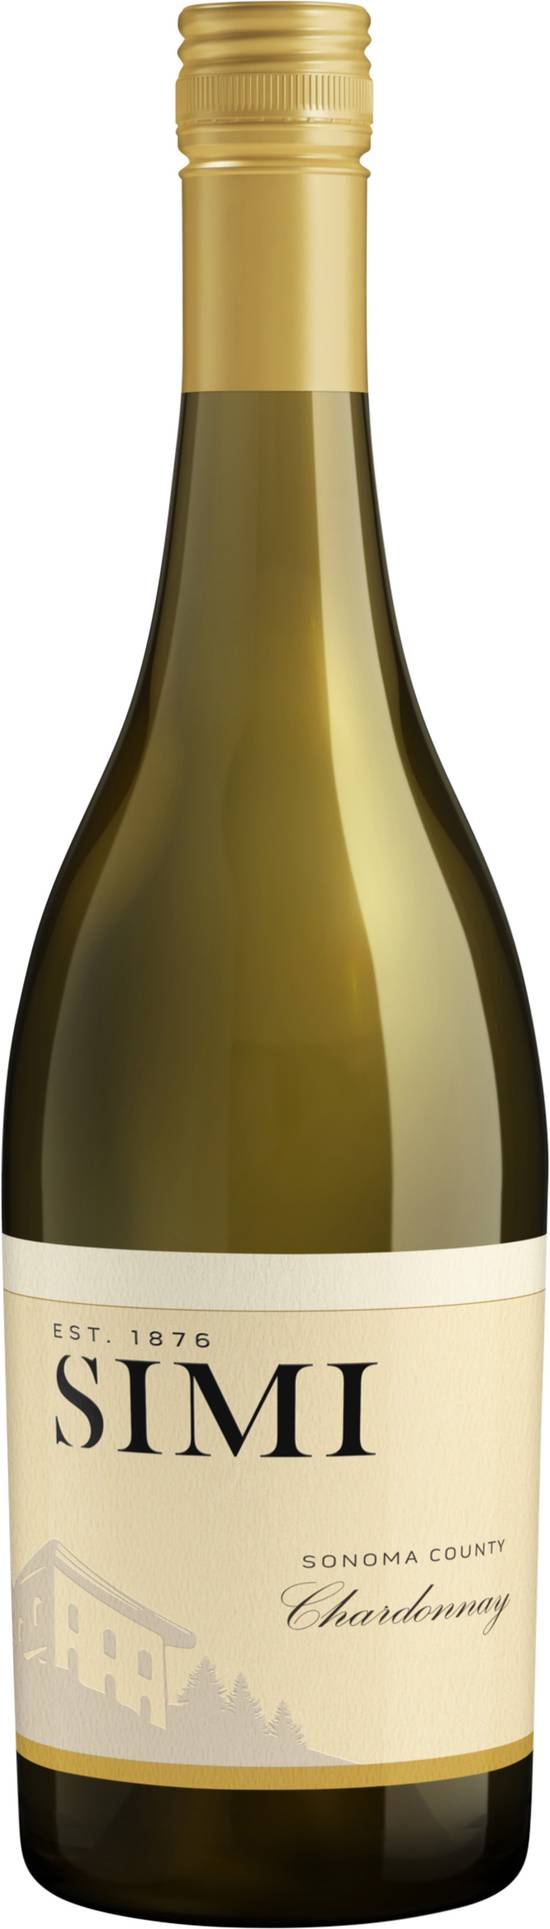 Simi Sonoma County Chardonnay Wine 2018 (750 ml)